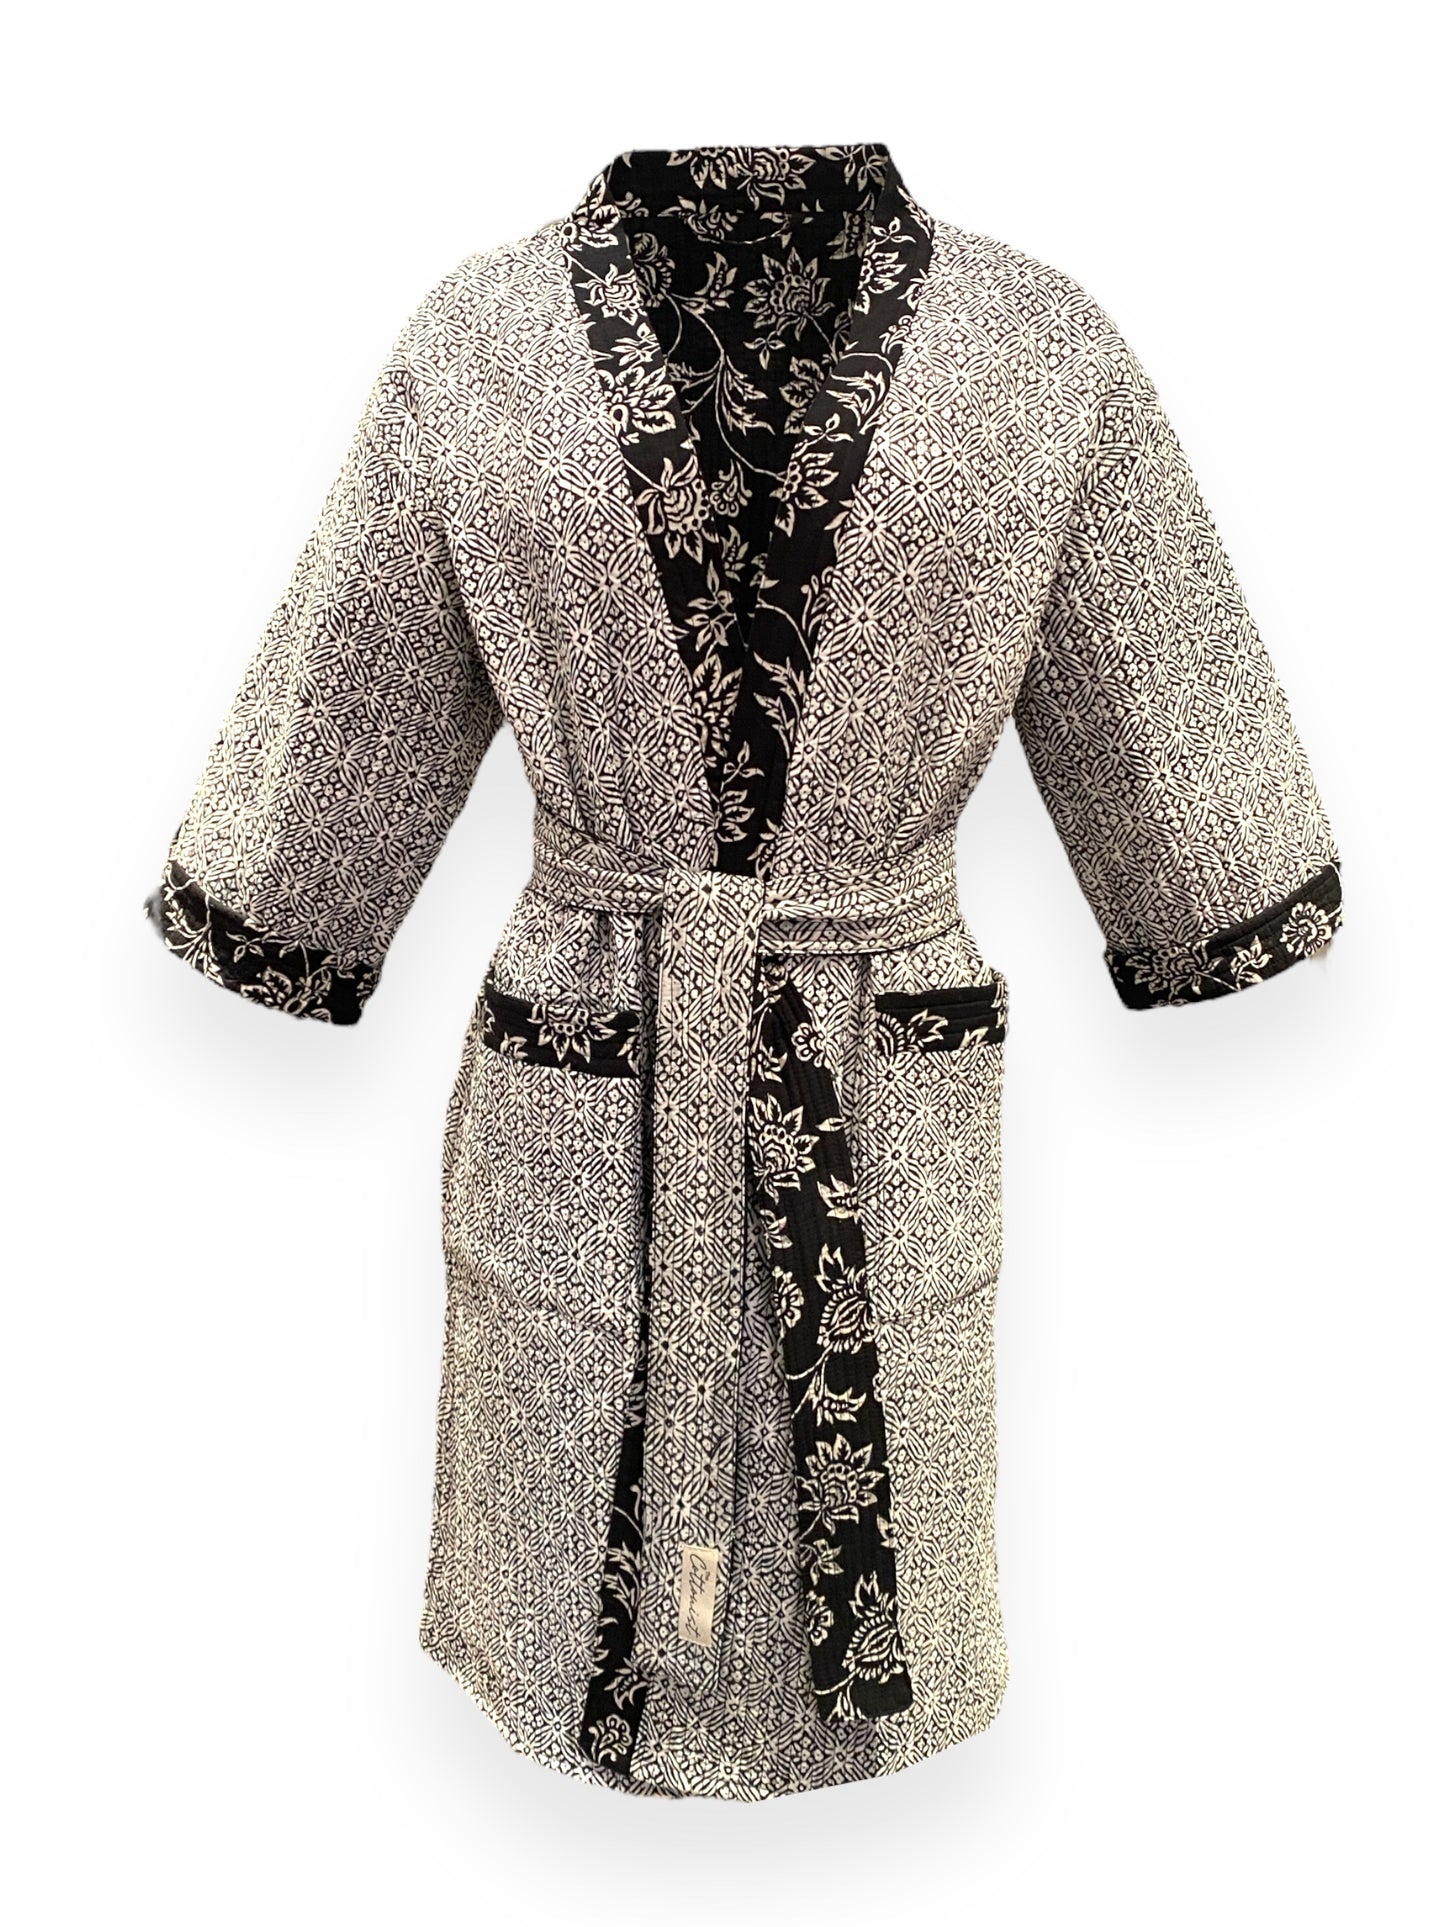 Black & White Chint handblock print Reversible Quilted Kimono robe